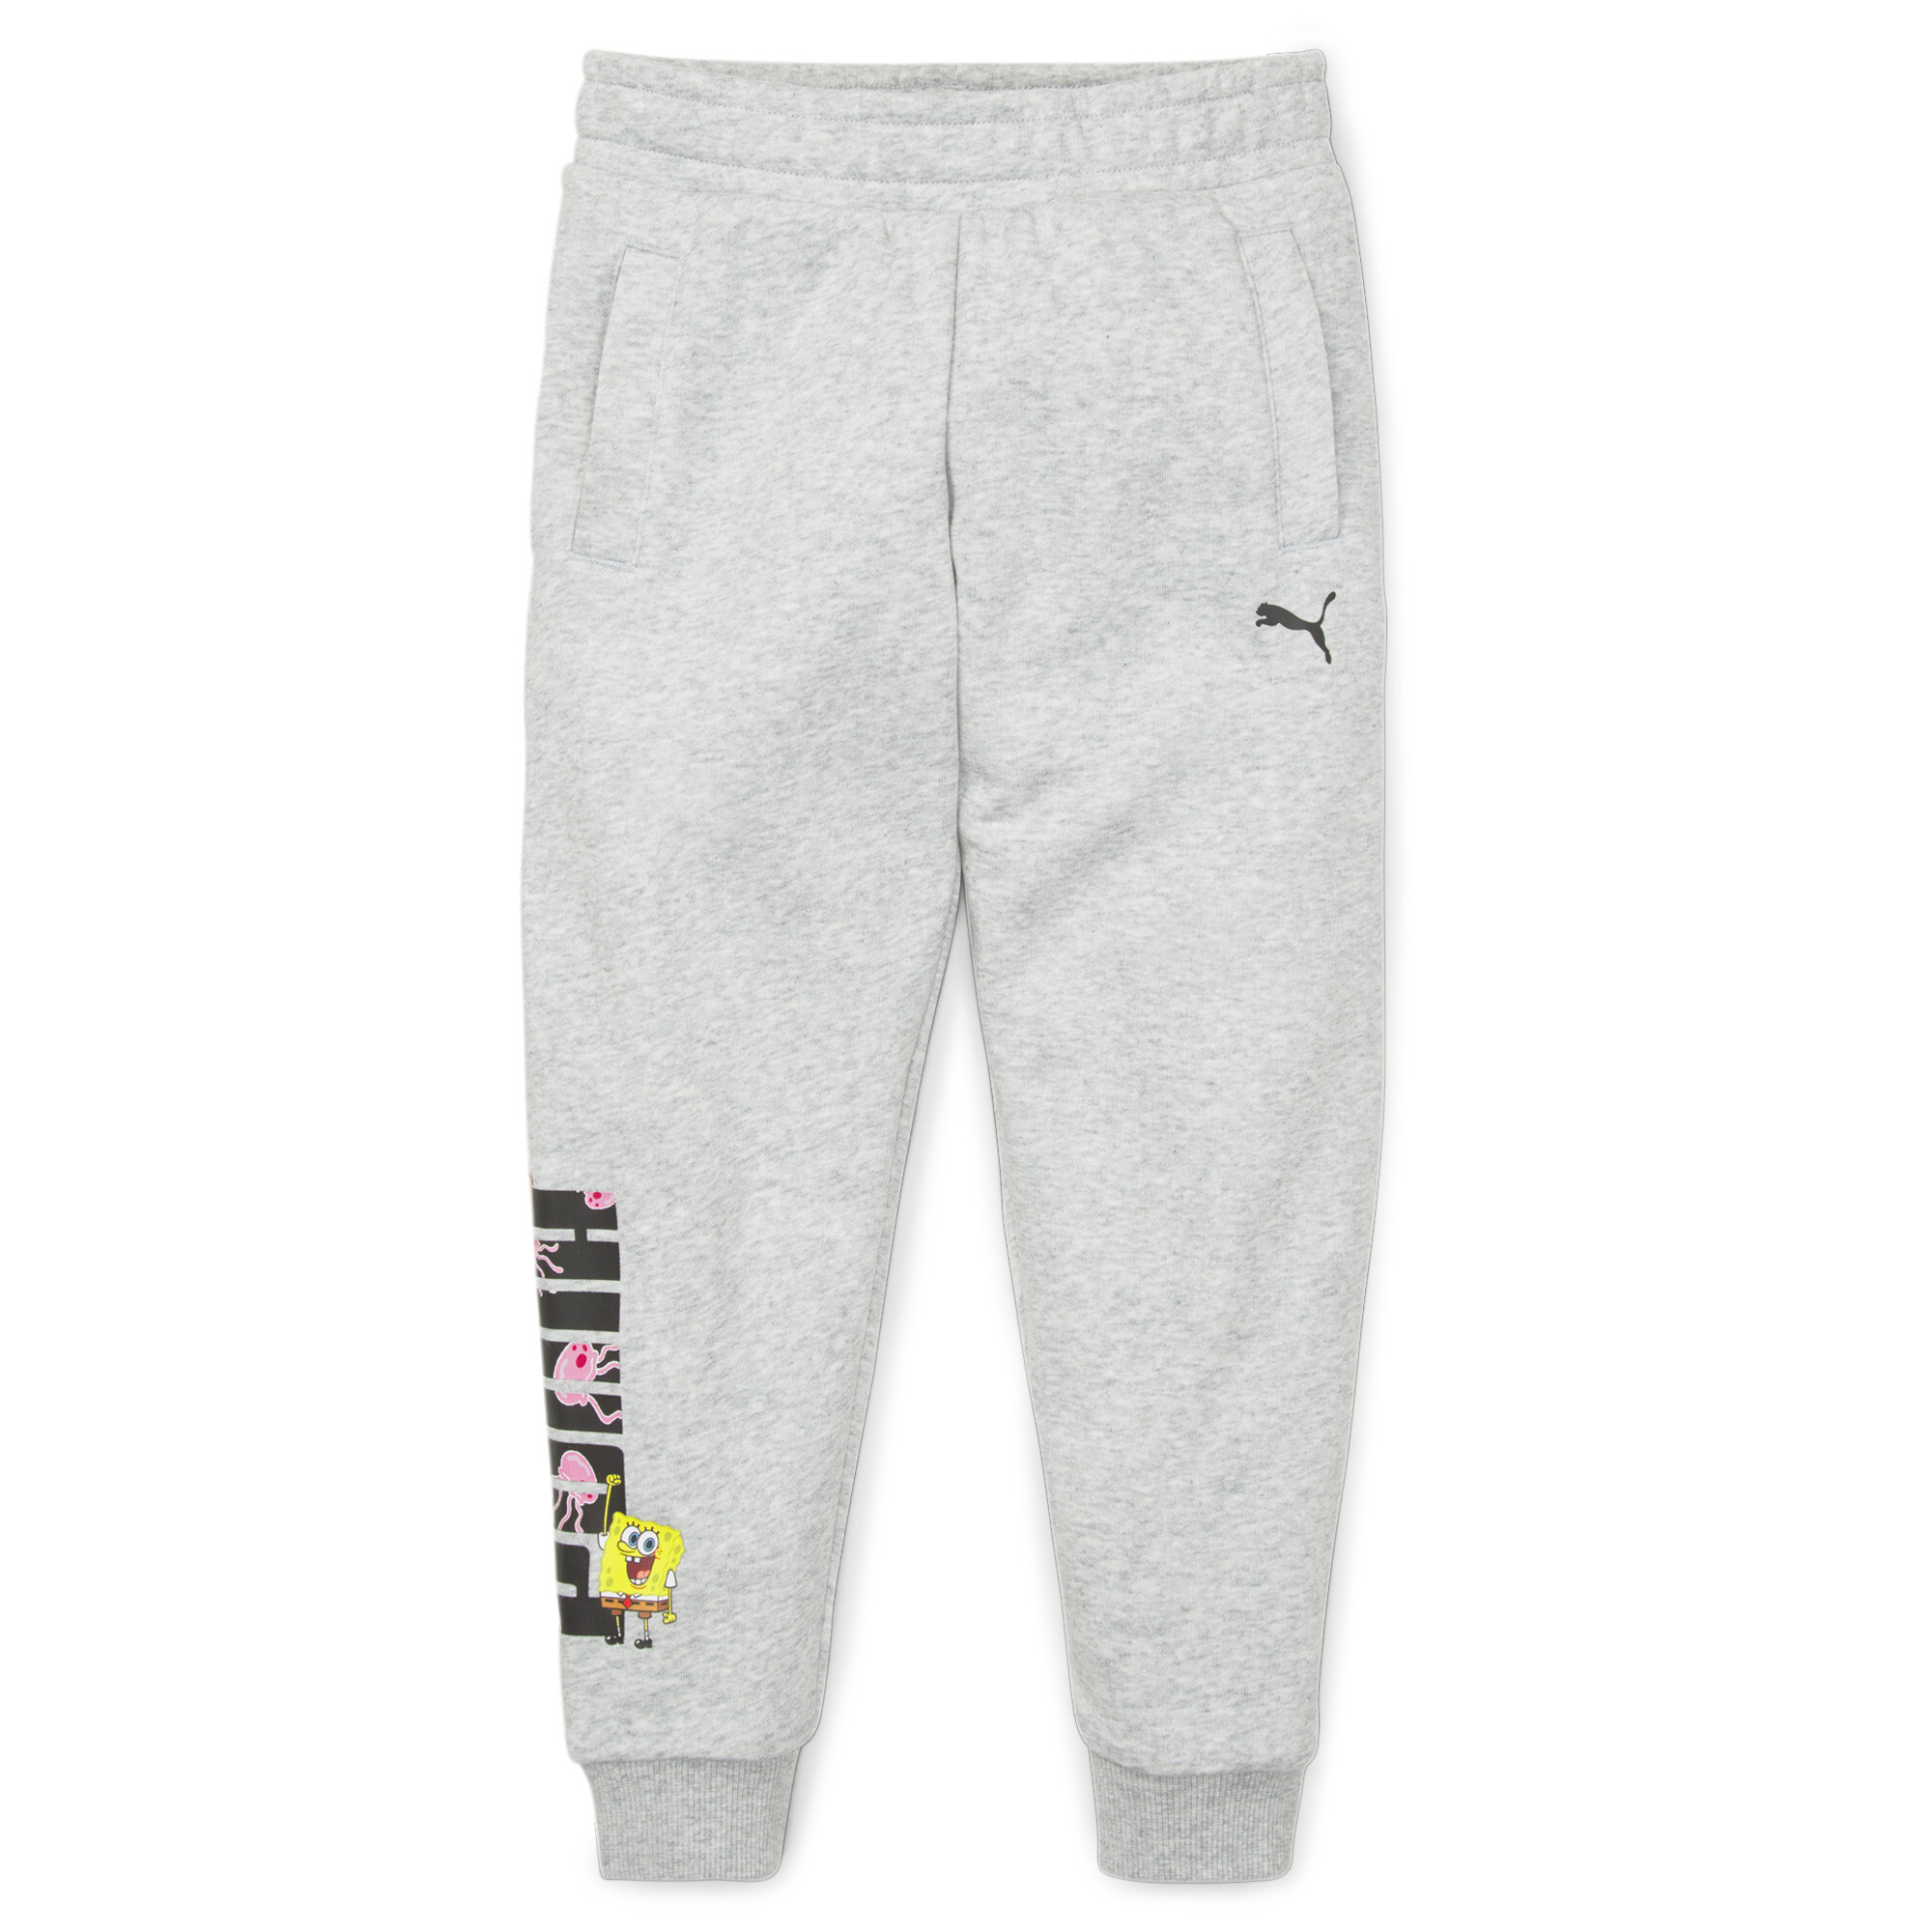 Puma X SPONGEBOB Sweatpants Kids, Gray, Size 11-12Y, Clothing